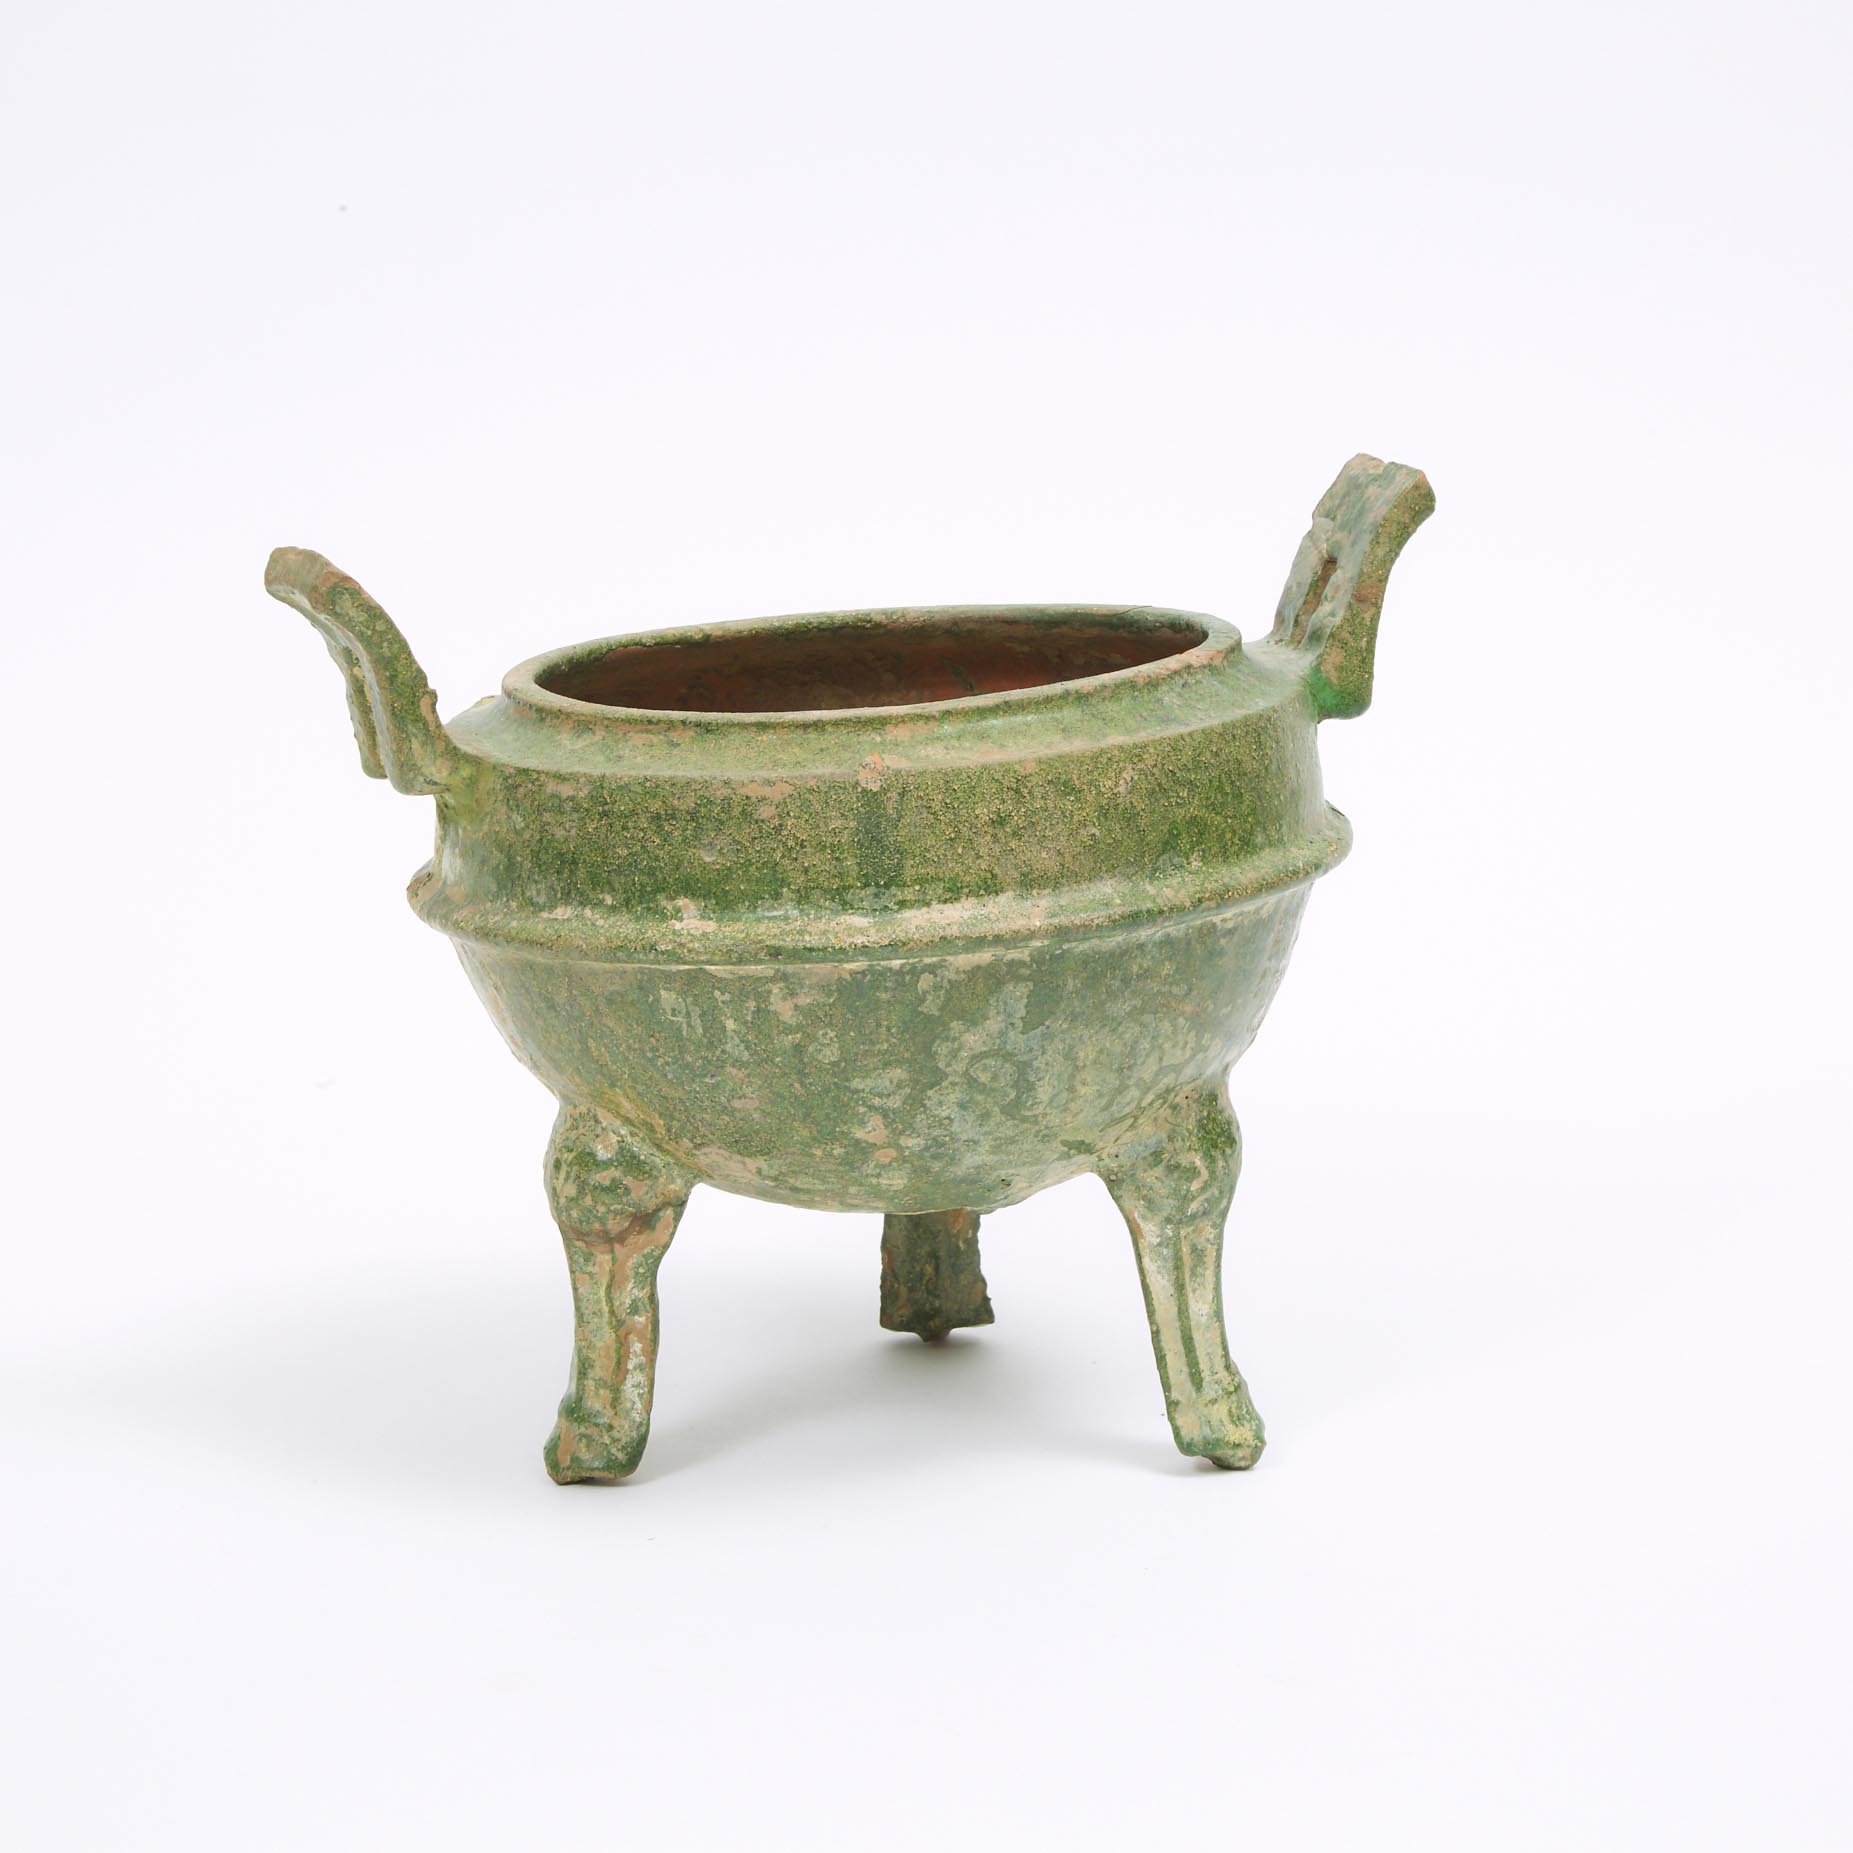 A Green-Glazed Pottery Tripod Ding, Possibly Han Dynasty